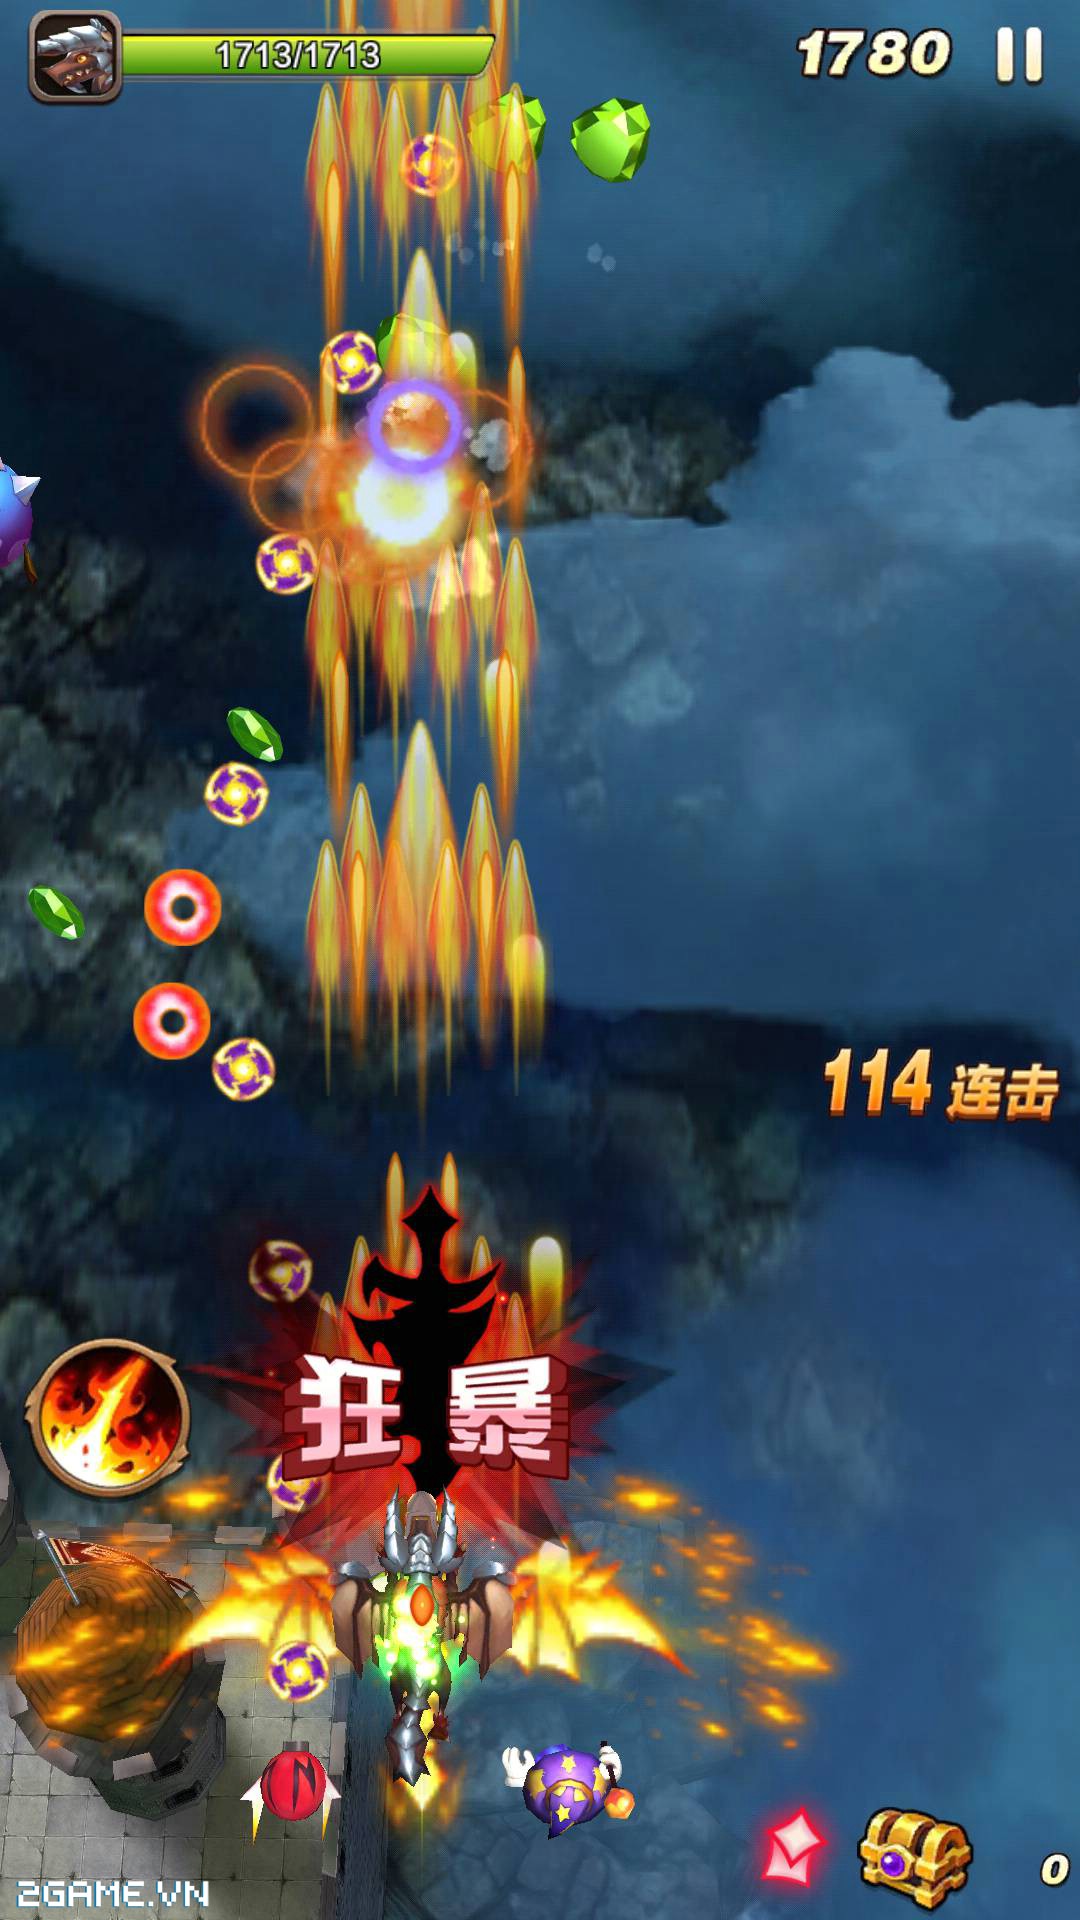 2game_anh_game_bi_kip_luyen_rong_3d_mobile_9.jpg (1080×1920)